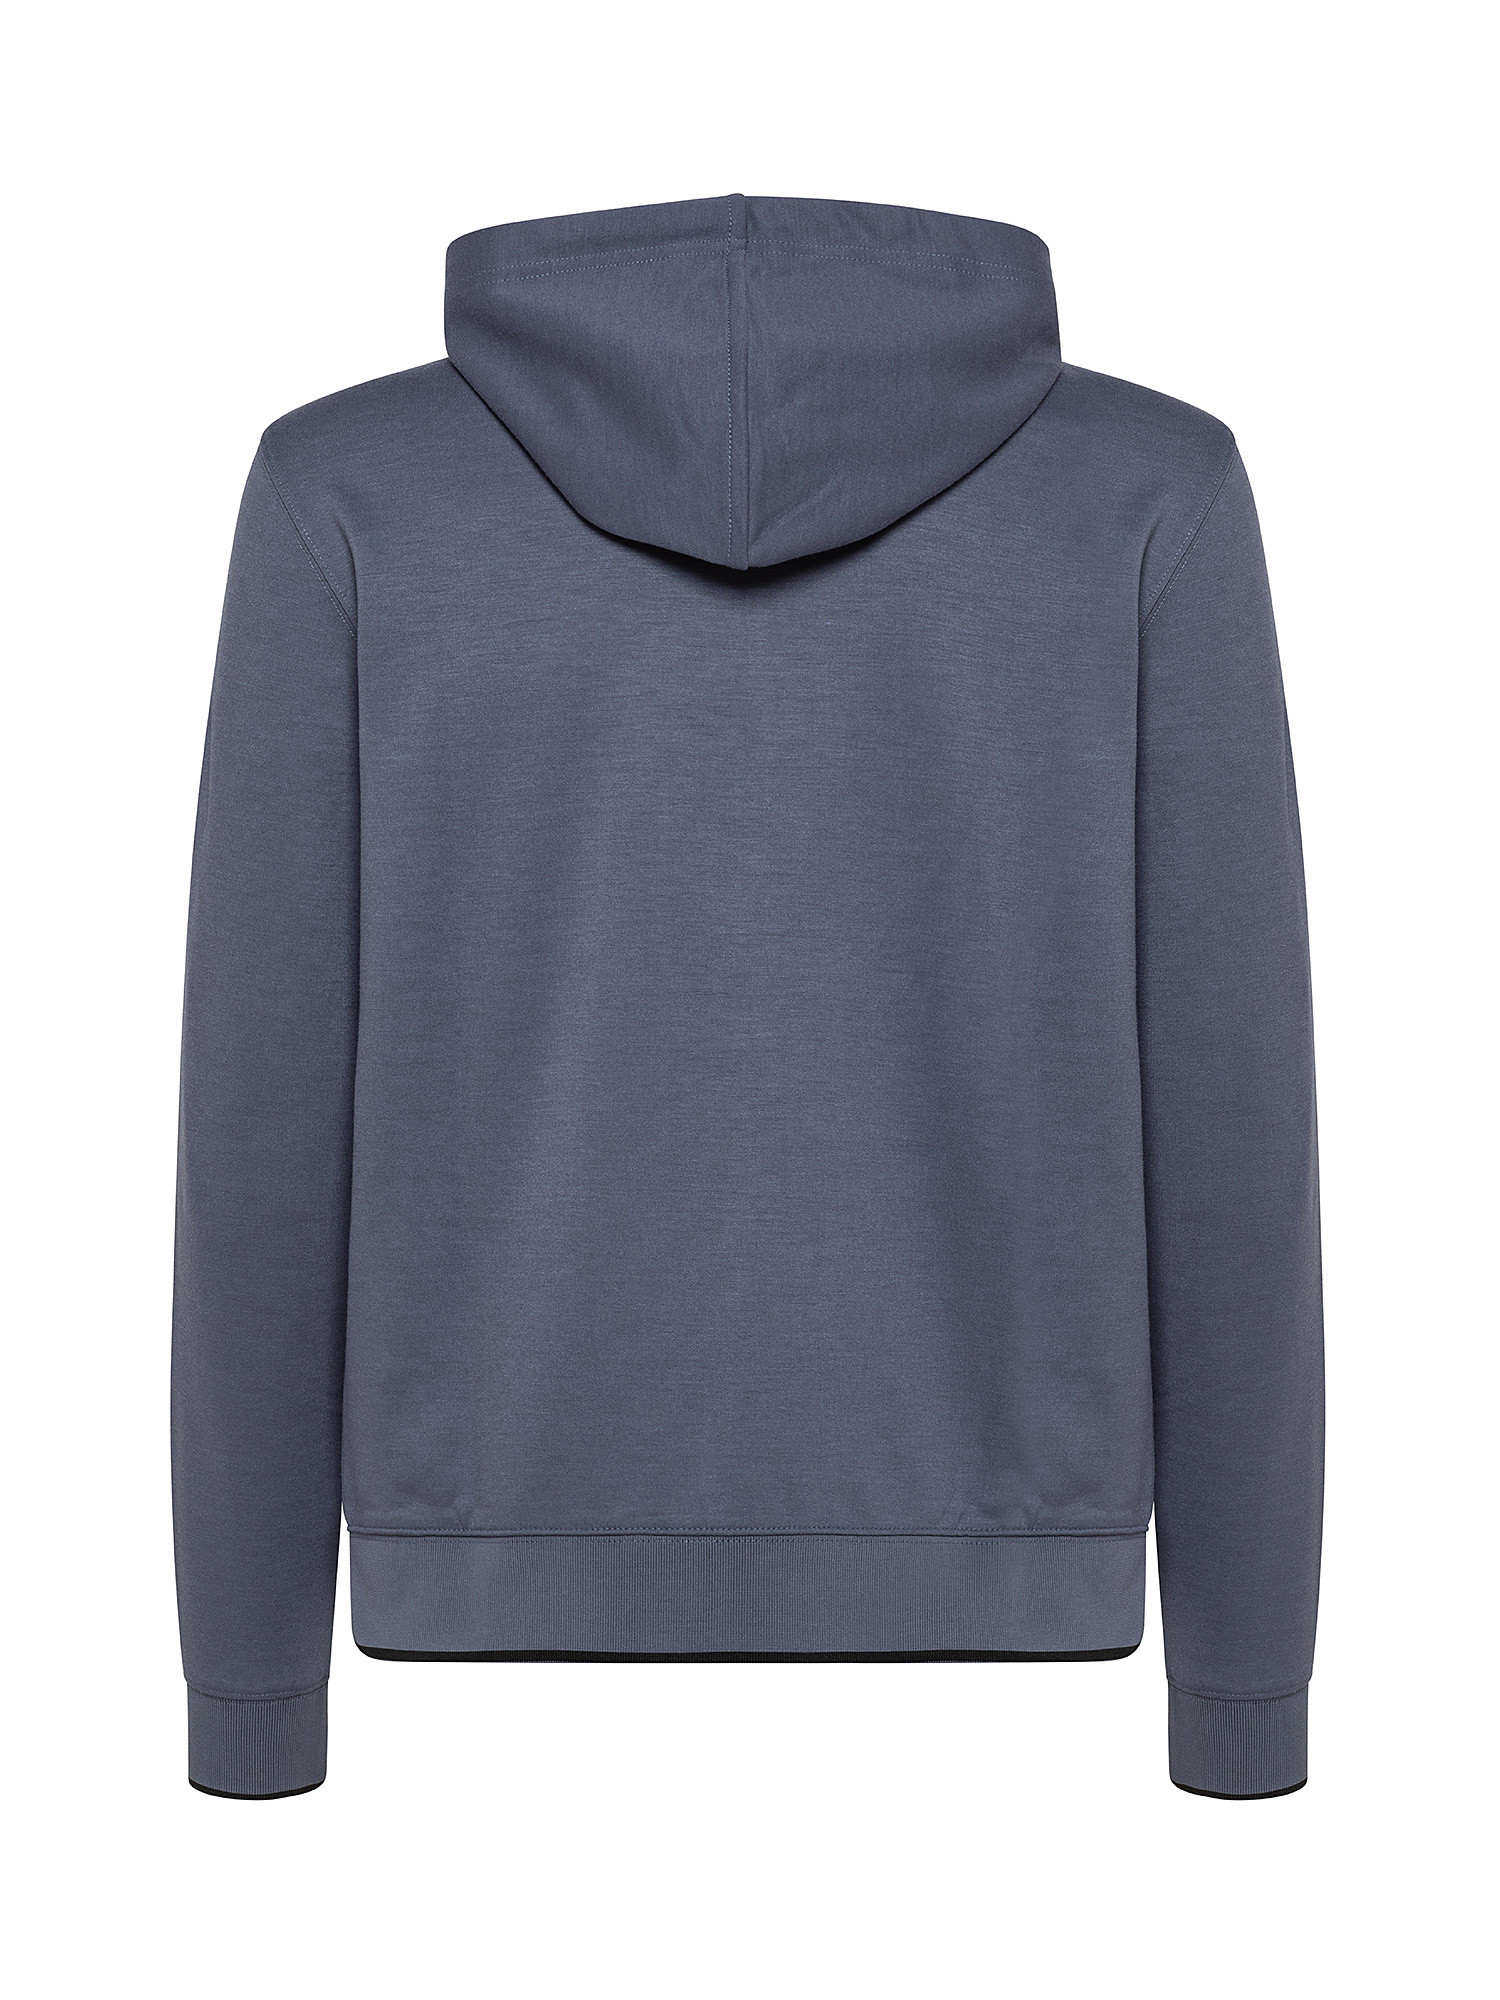 Sweatshirt, Dark Grey, large image number 1